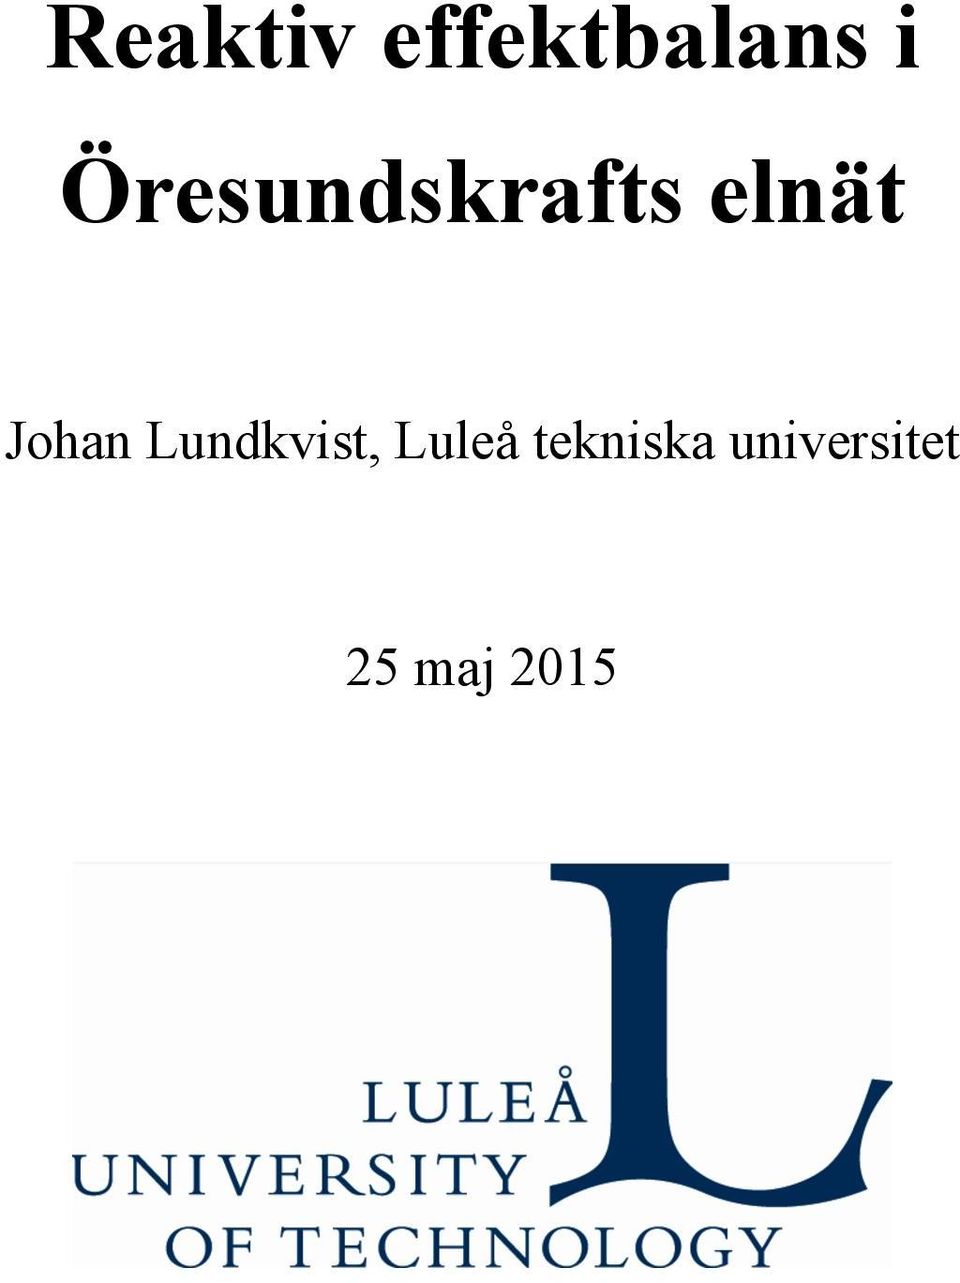 Johan Lundkvist, Luleå